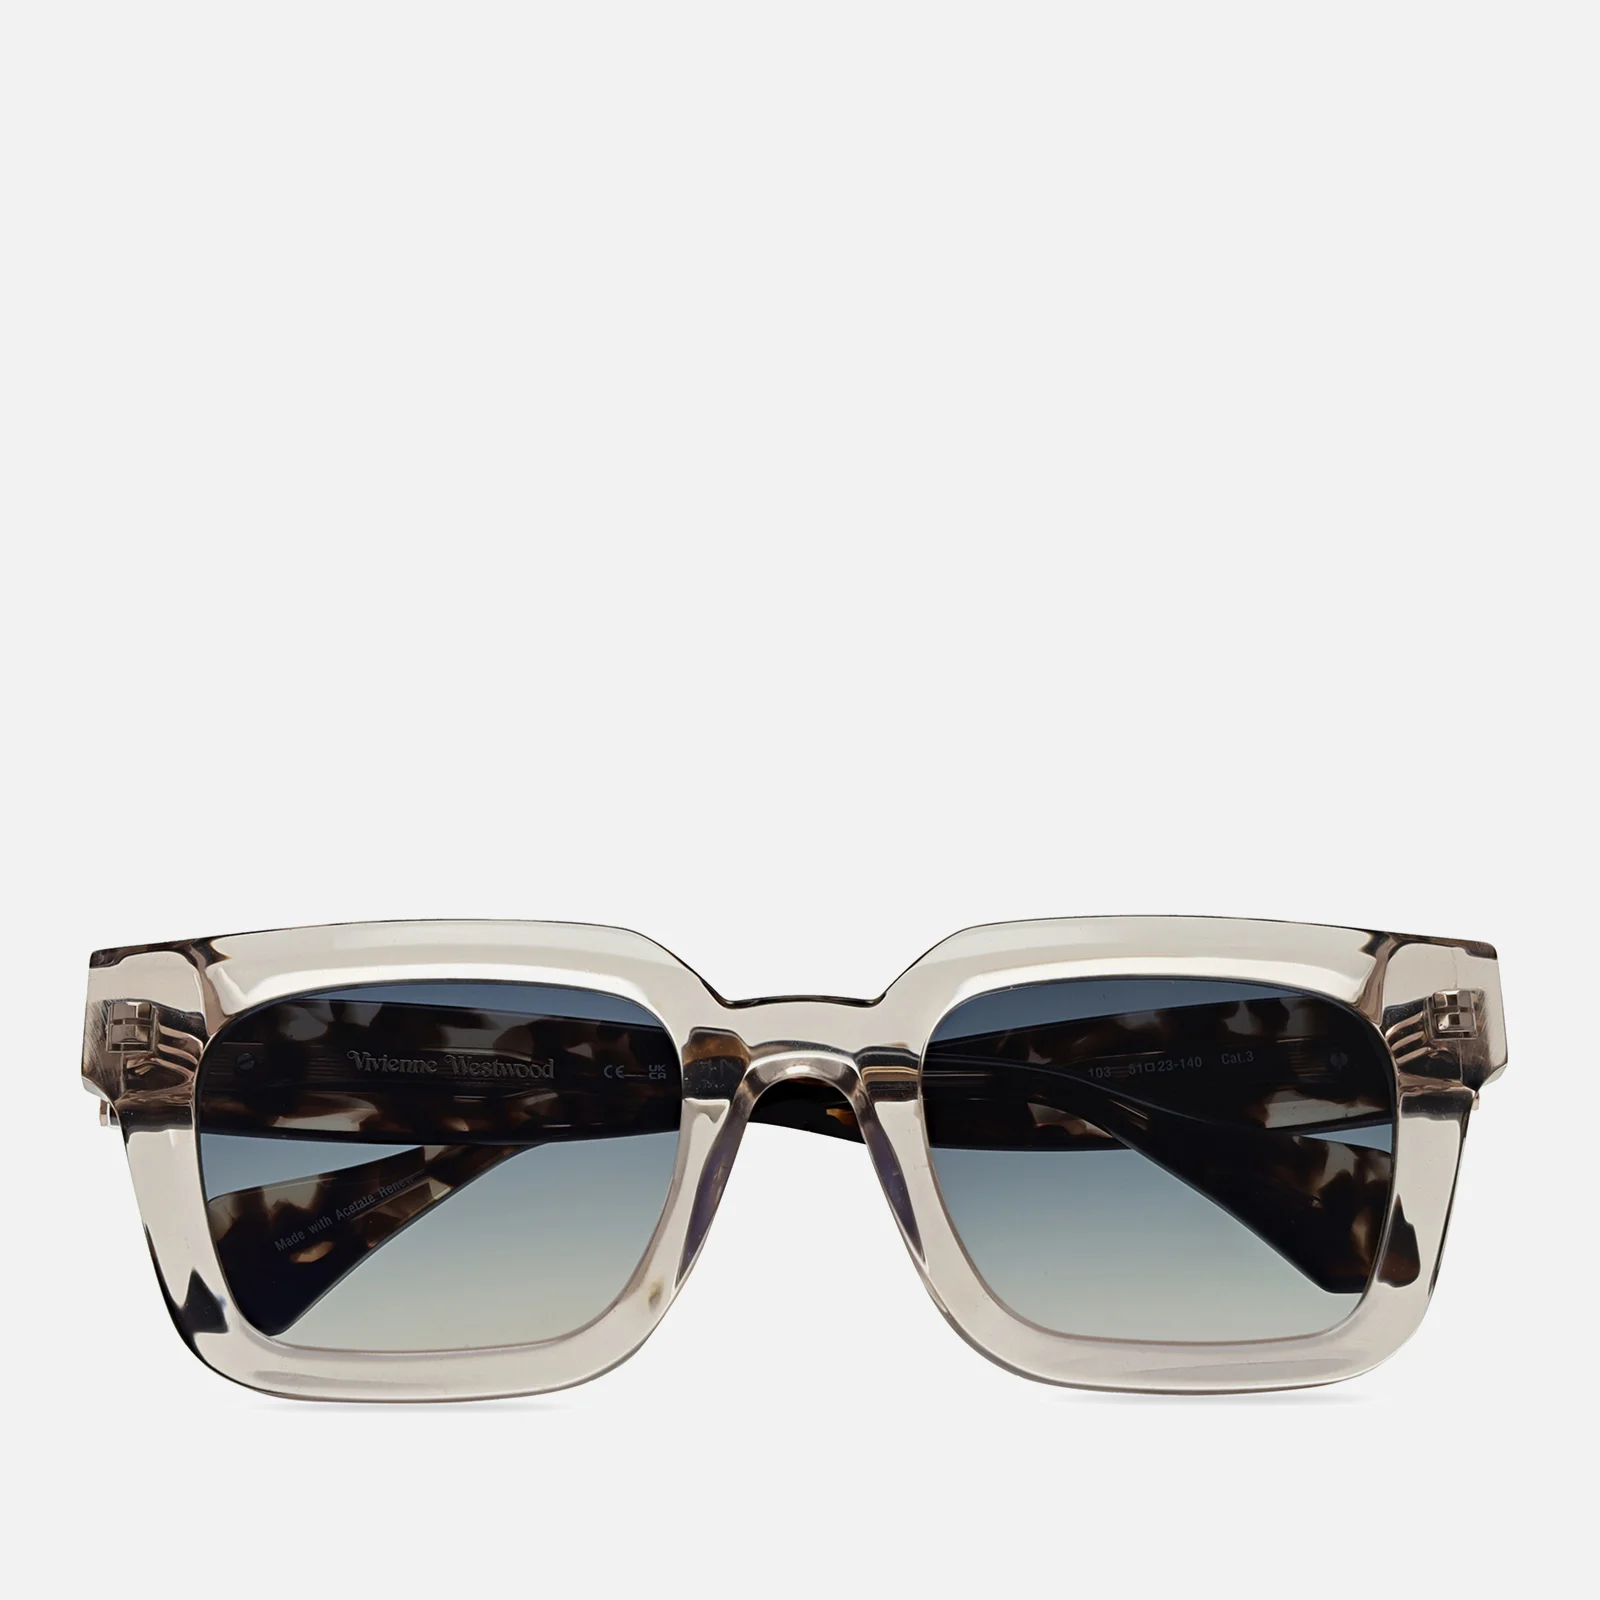 Vivienne Westwood Cary Rectangle Acetate Sunglasses Image 1